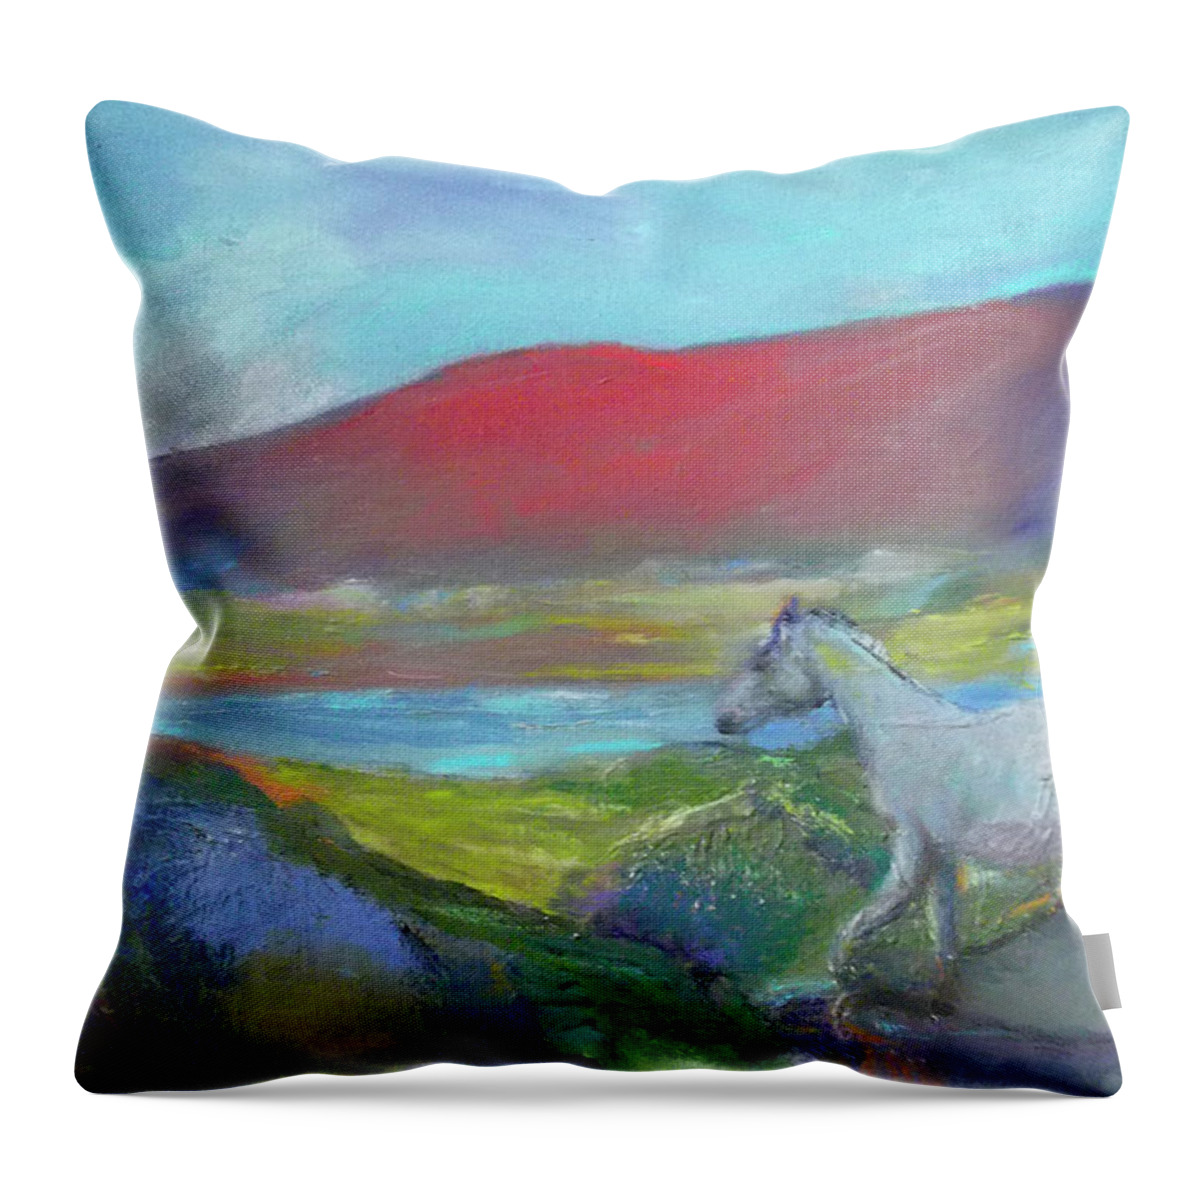 Horse Throw Pillow featuring the painting Free Spirit by Susan Esbensen